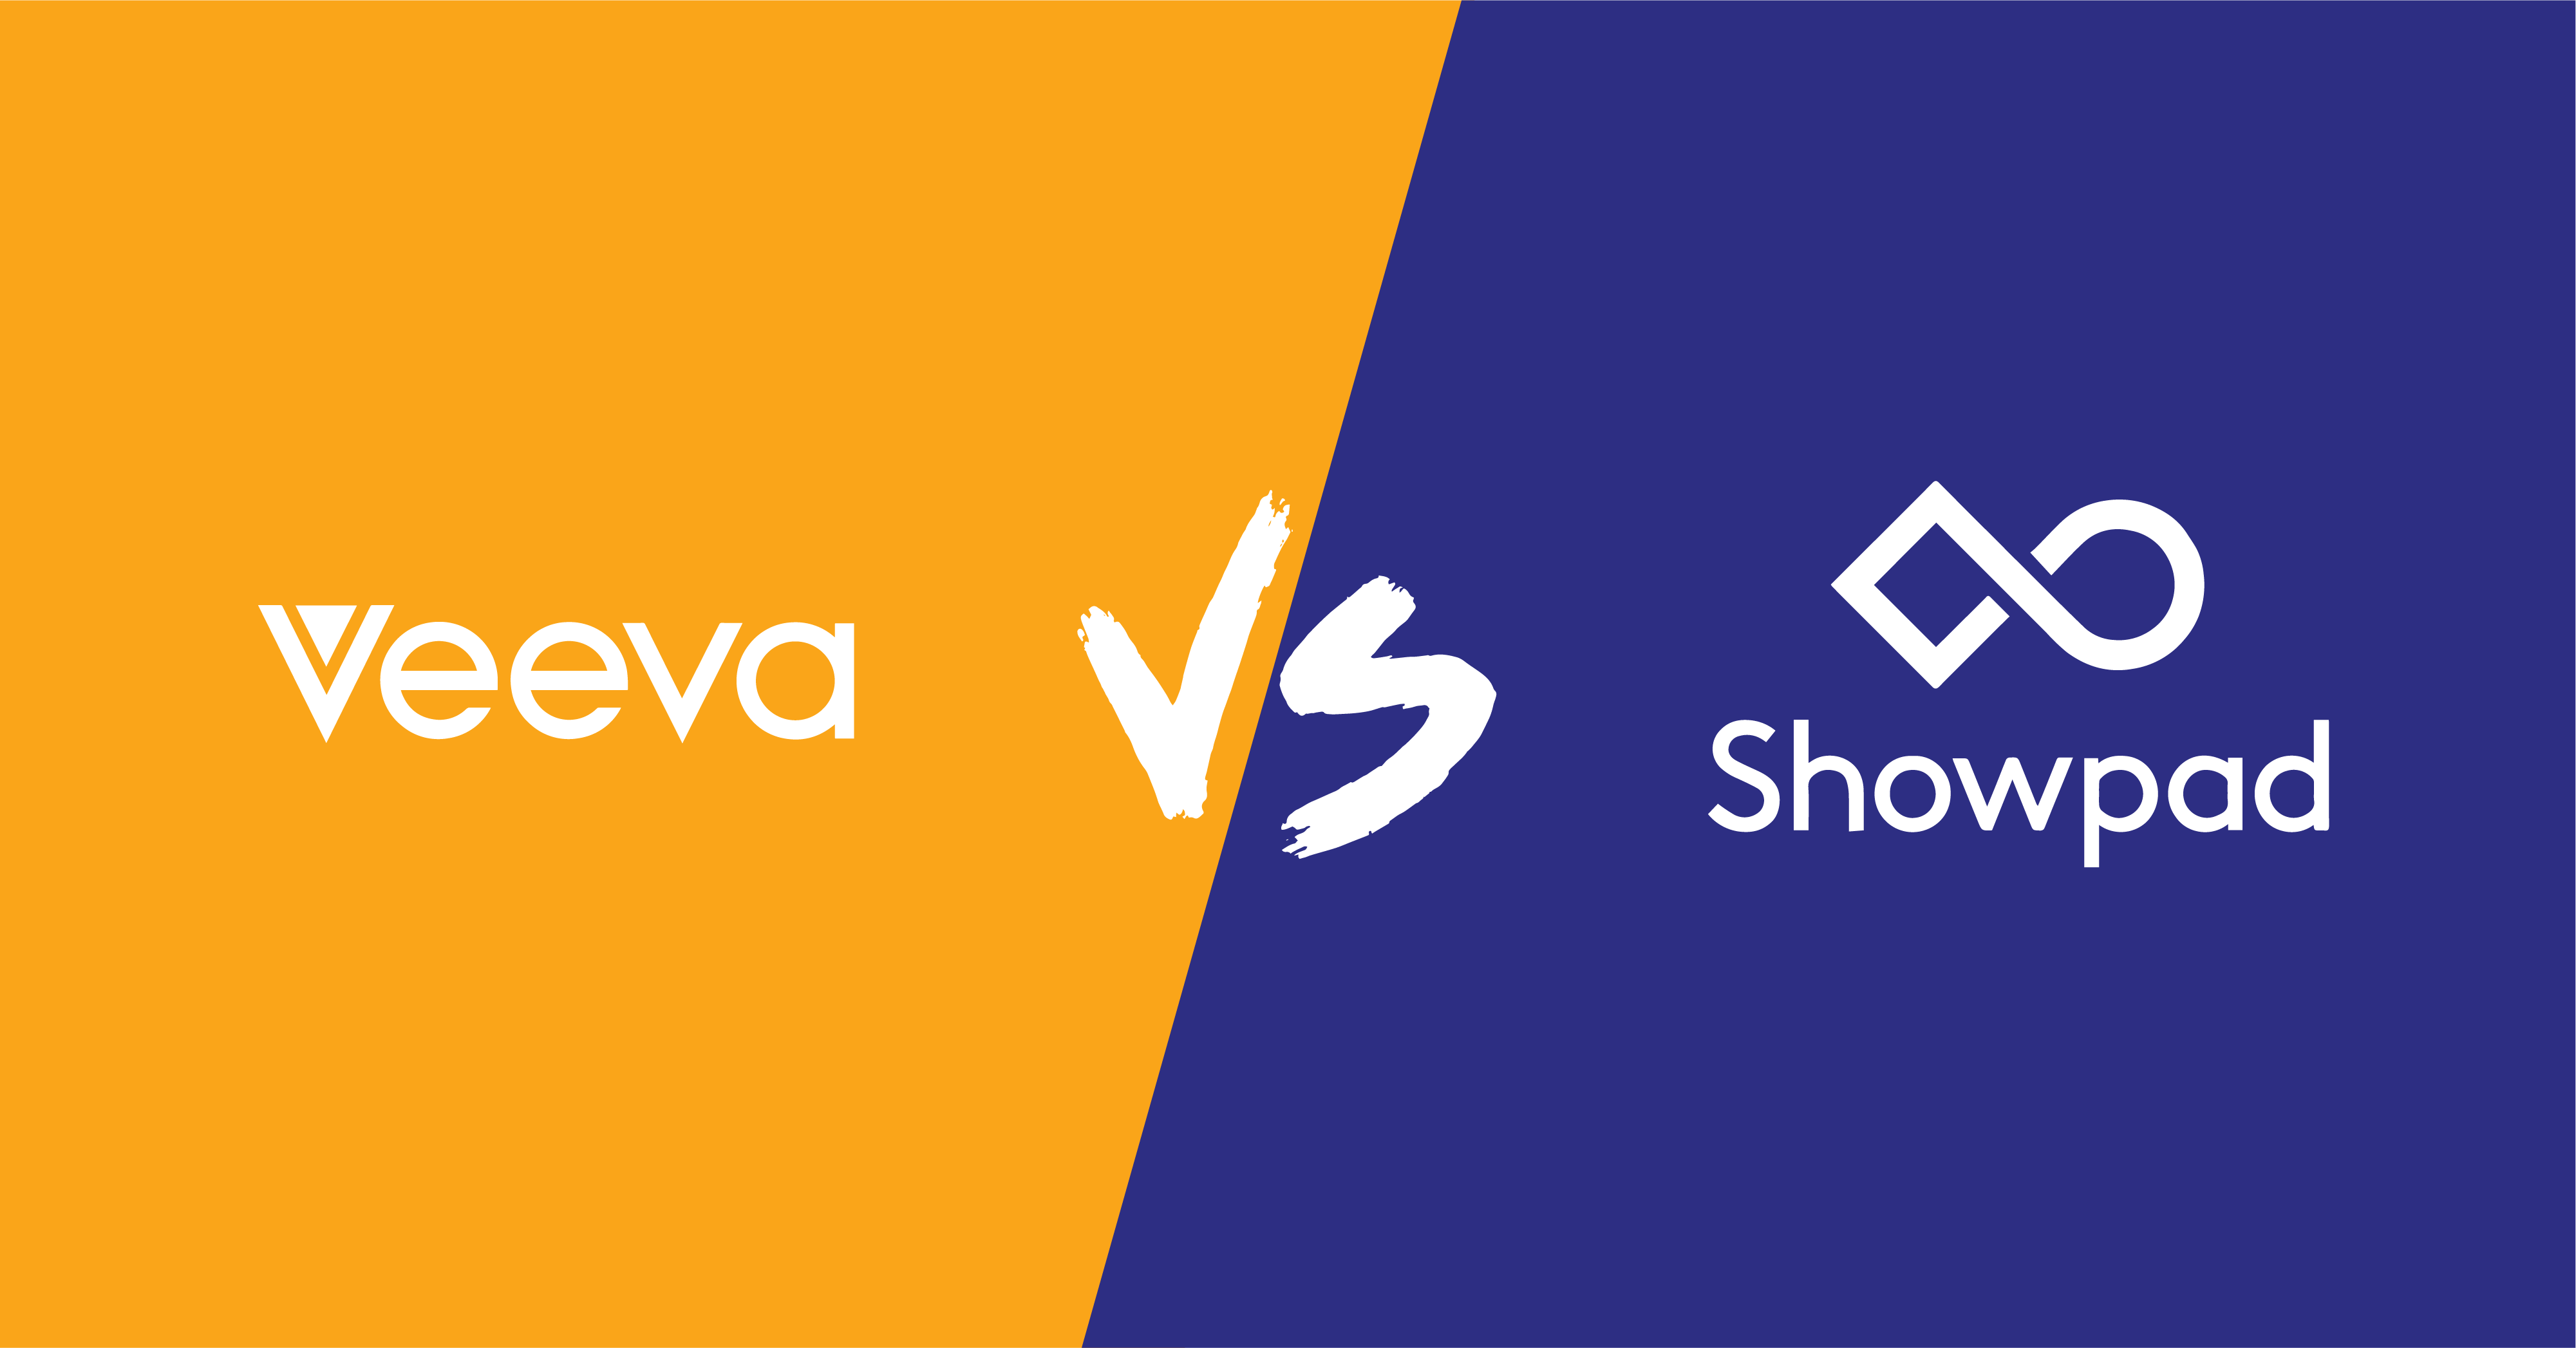 Veeva, Showpad or both?